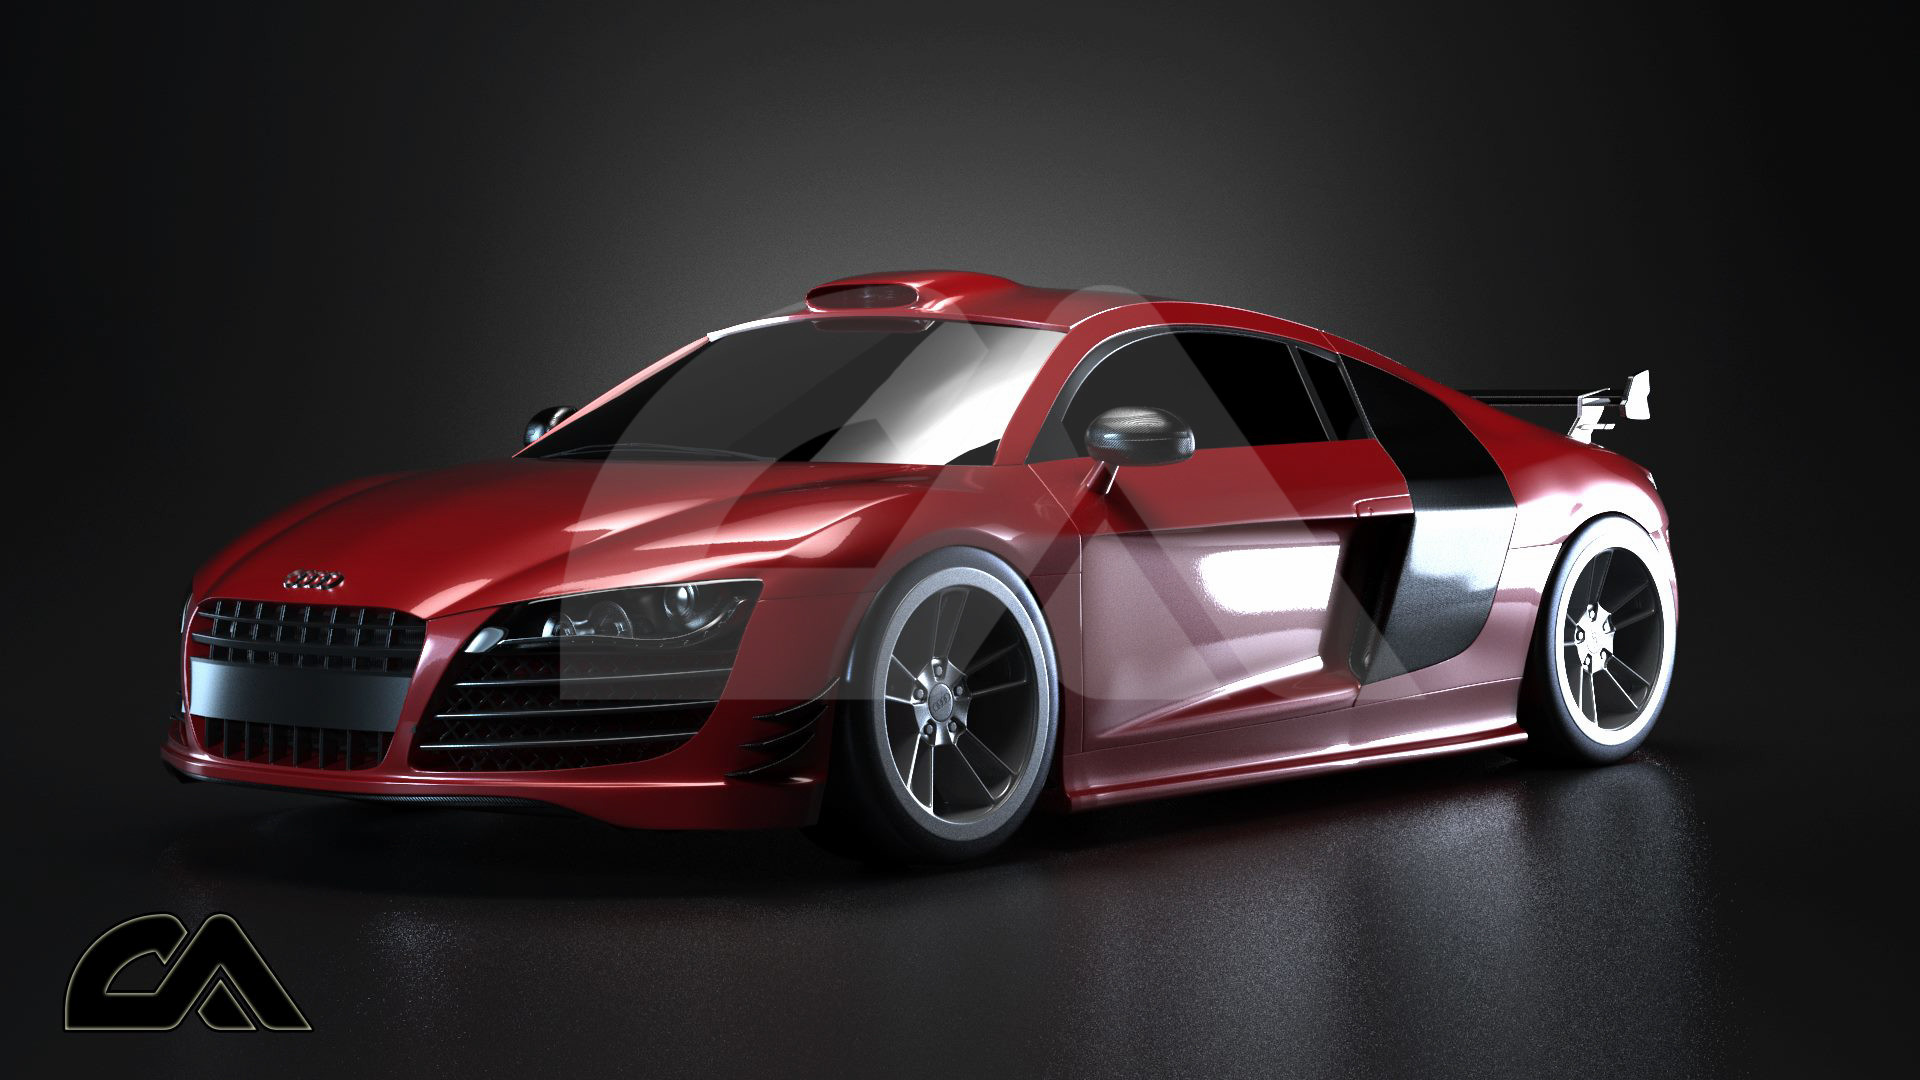 First 3D car – The Audi R8